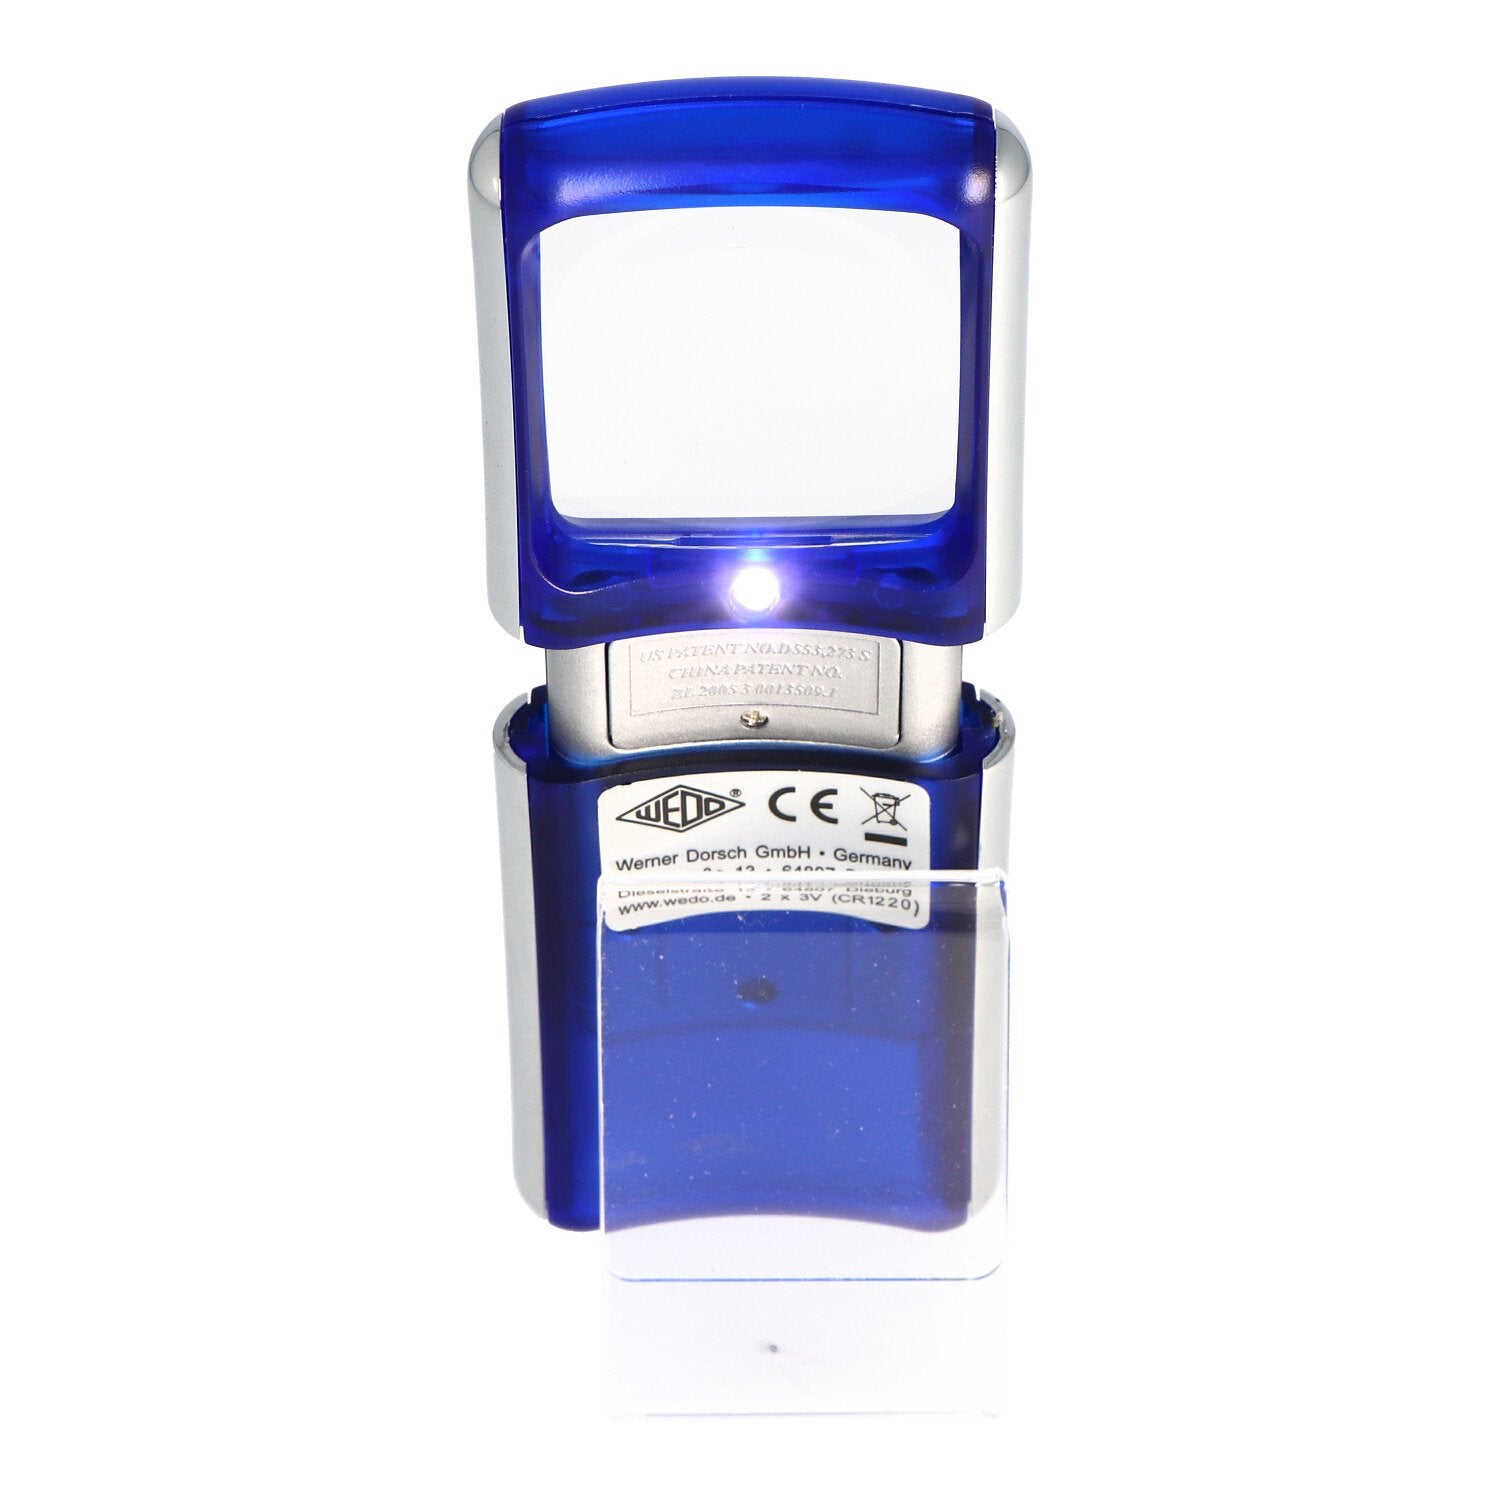 Vergrootglas met LED verlichting en 3x vergroting, kleur blauw, in blisterverpakking